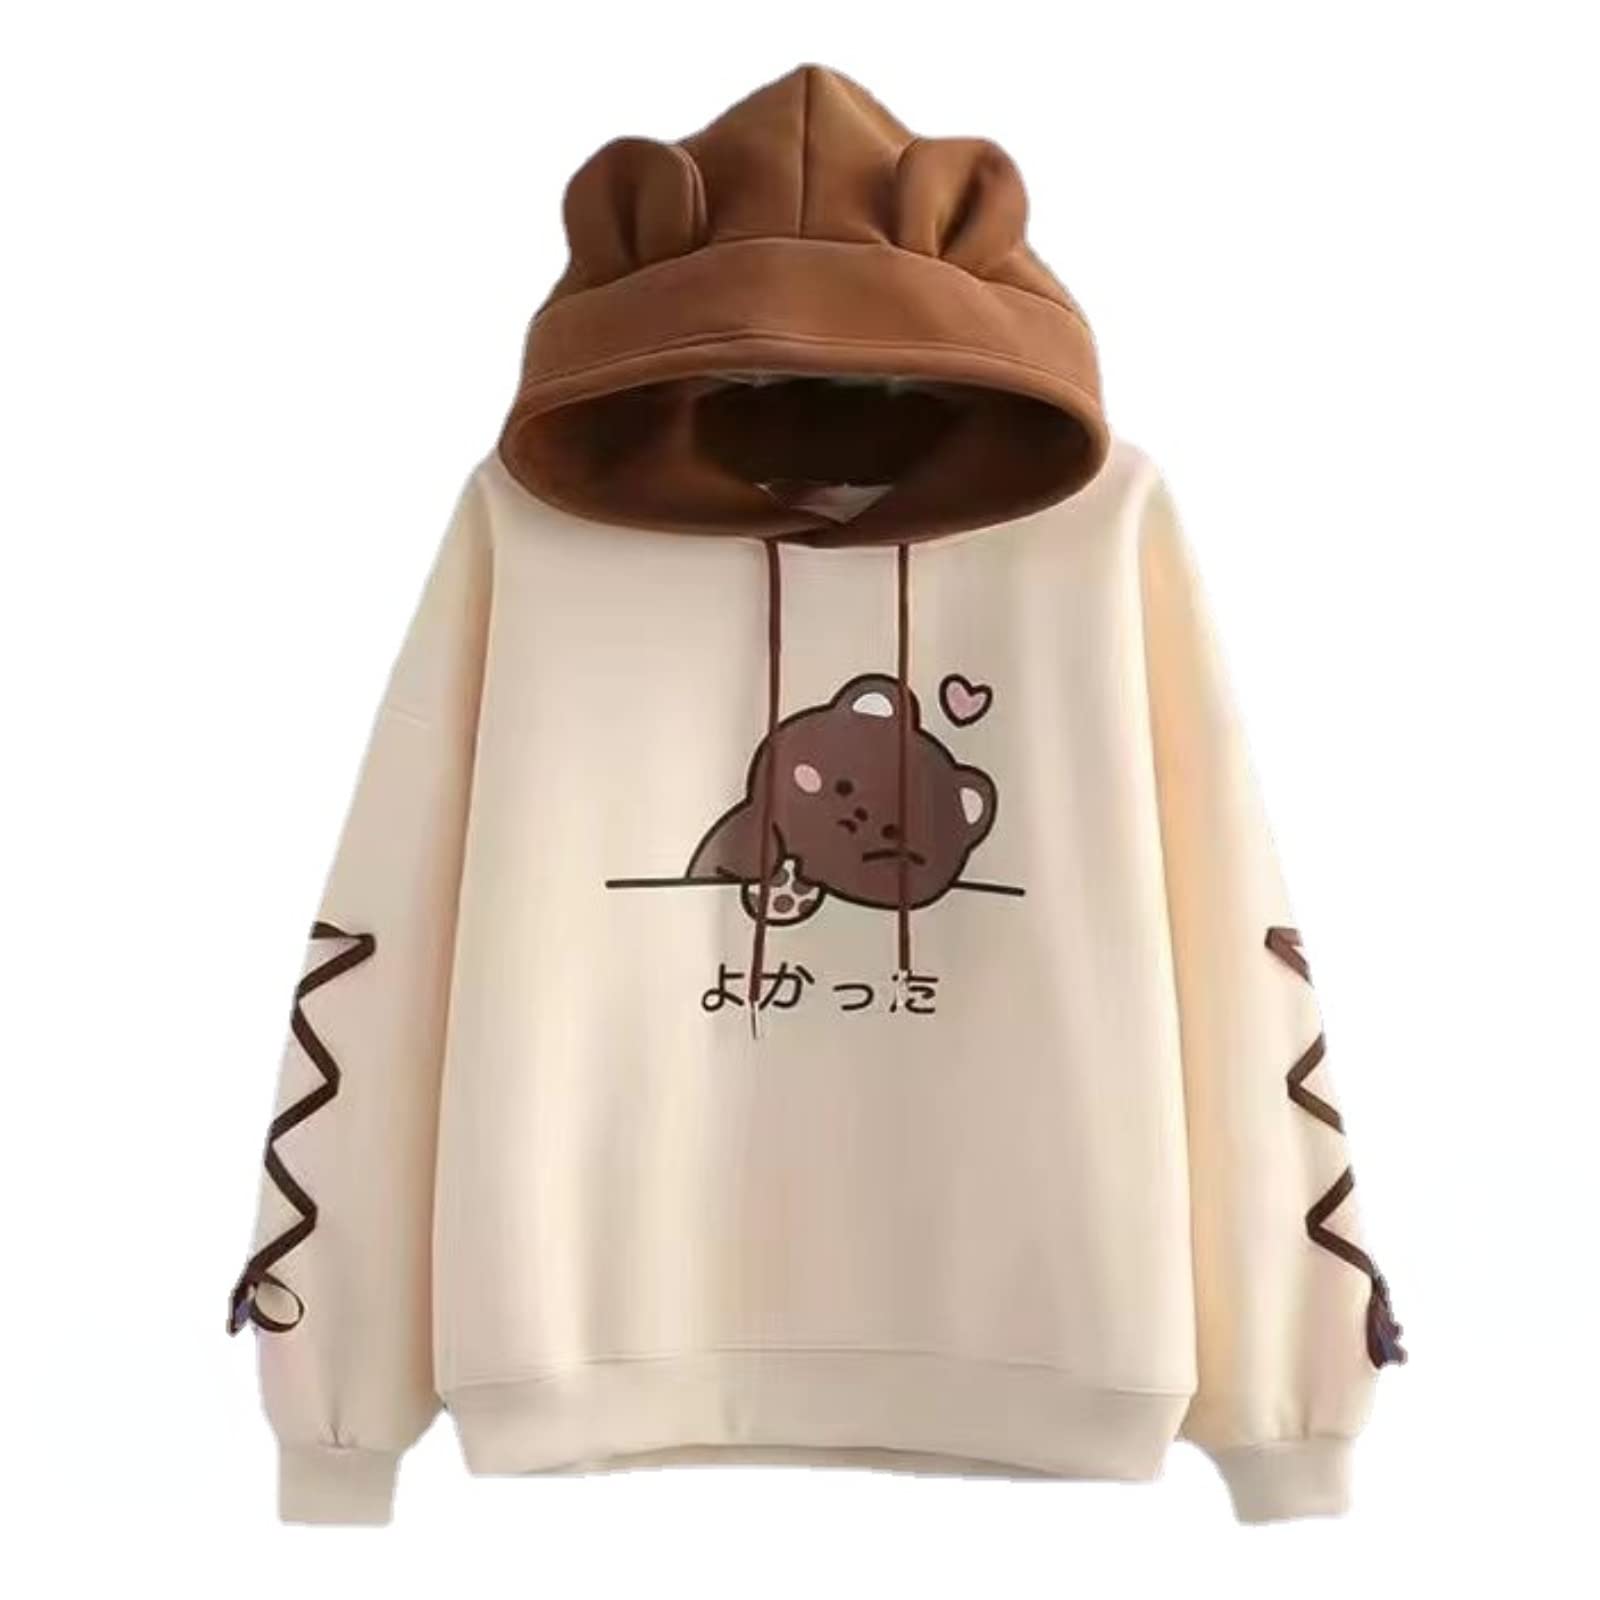 Cute Boba Bear Ear Hoodies Back to School Clothes for Teen Girls Teenagers Tops Sweatshirt Trendy Aesthetic 8 10 12